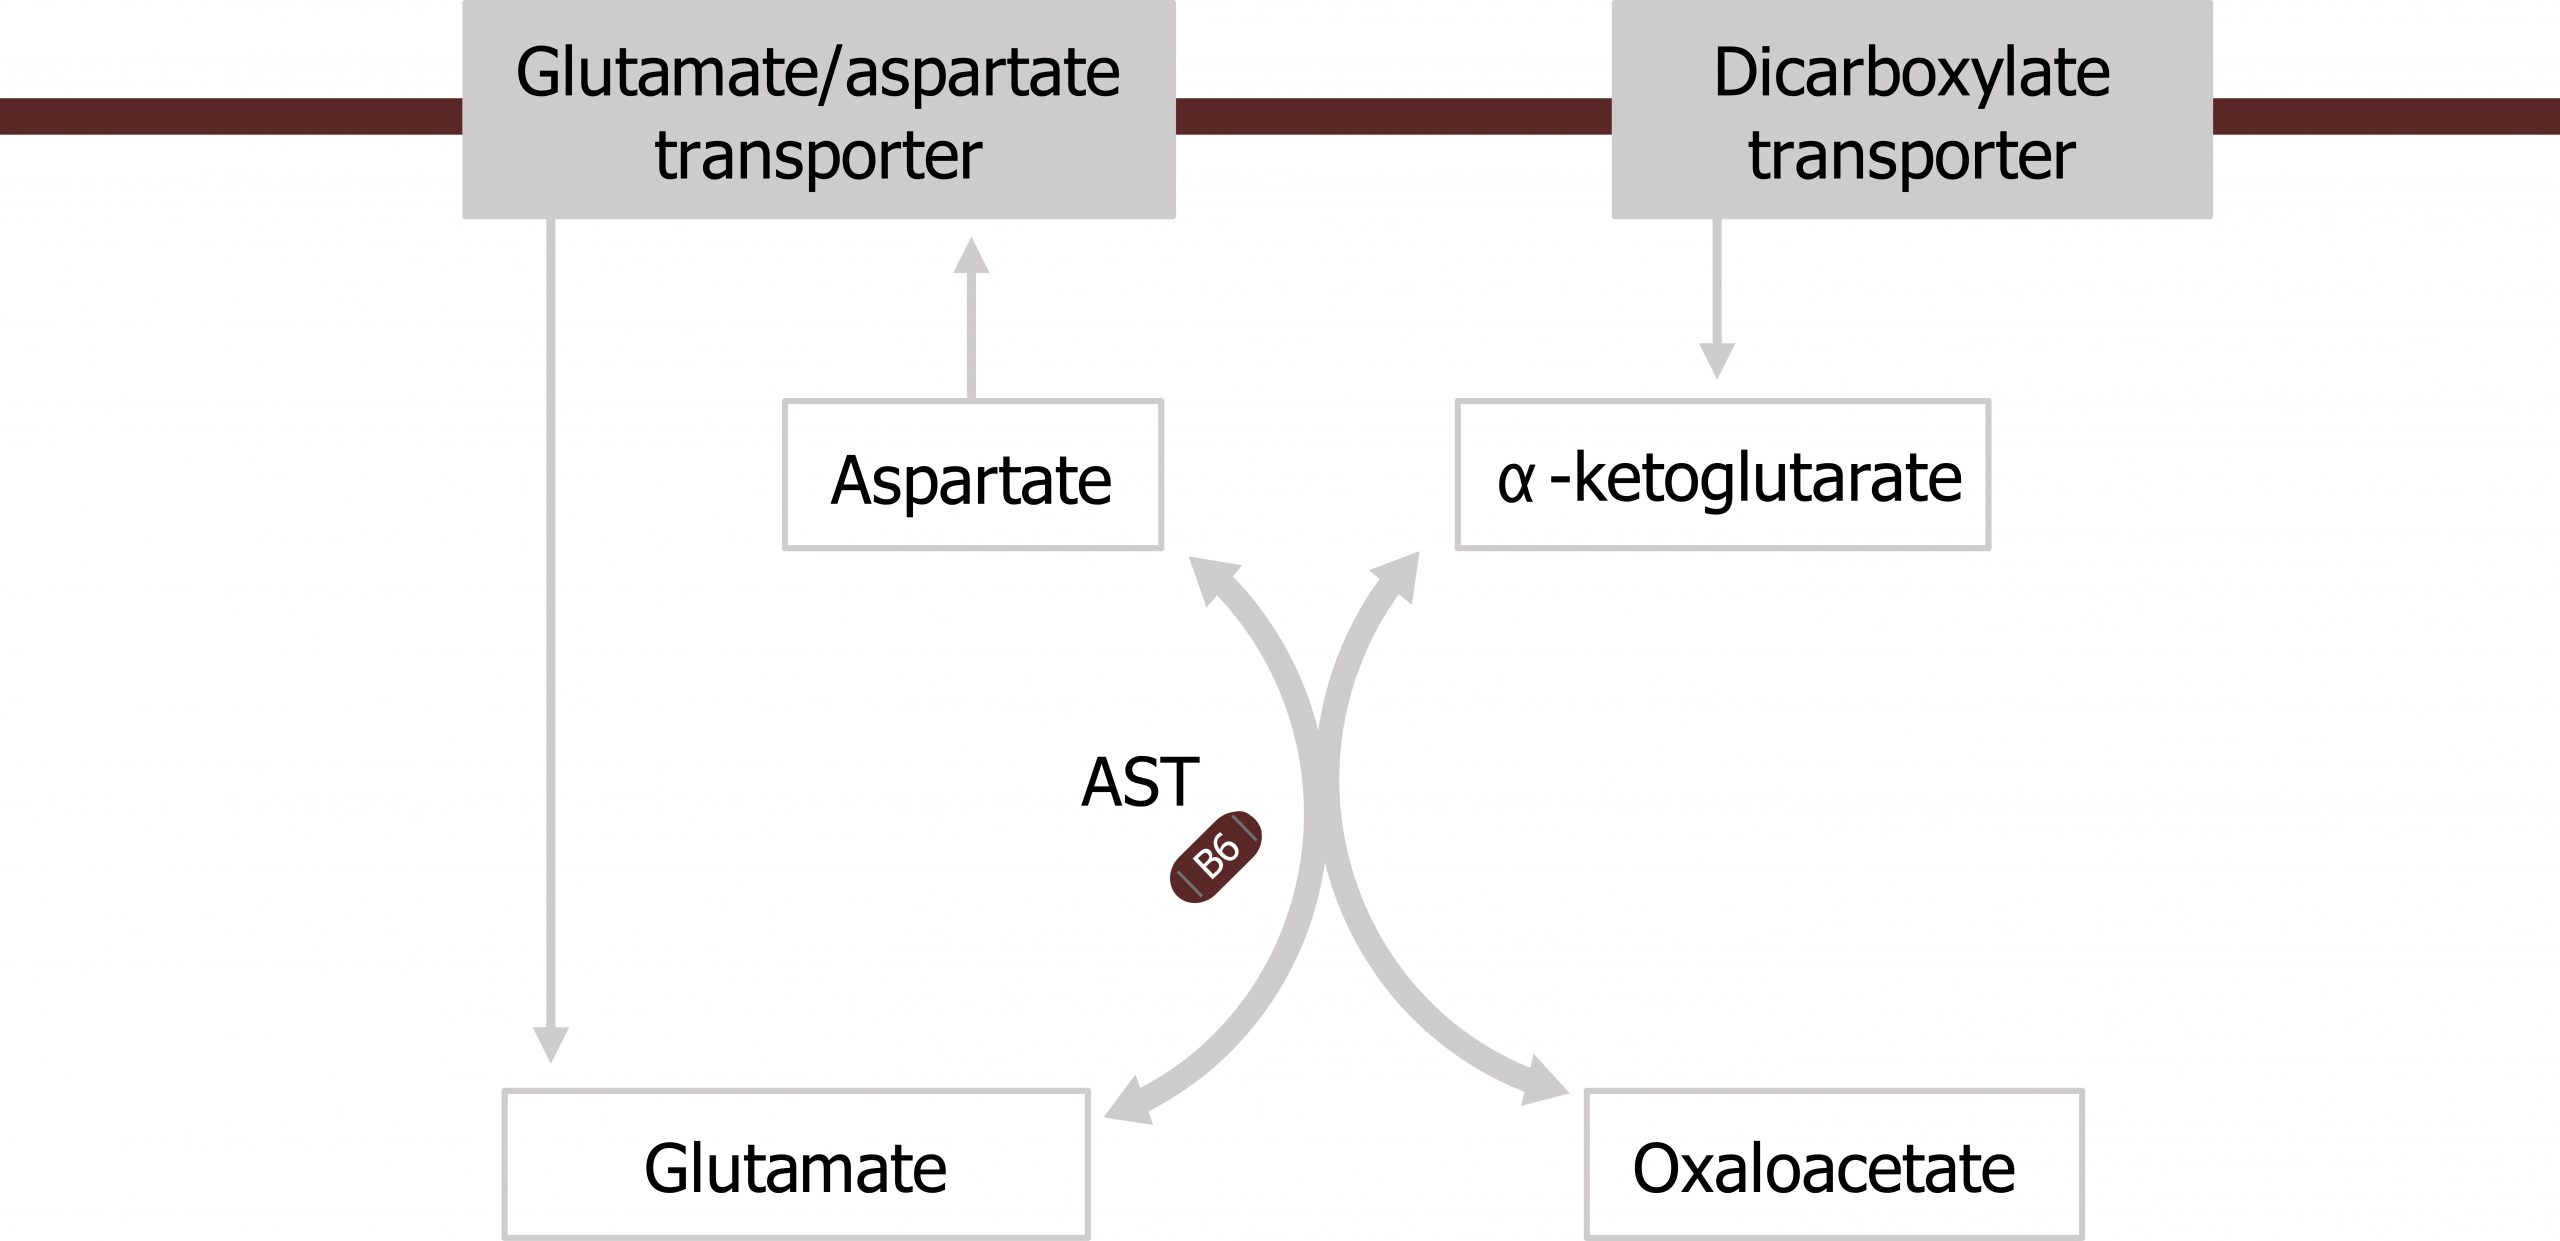 Glutamate/aspartate transporter arrow glutamate bidirectional arrow with AST to aspartate arrow glutamate/aspartate transporter. Dicarboxylate transporter arrow α-ketoglutarate bidirectional arrow with AST to oxaloacetate.